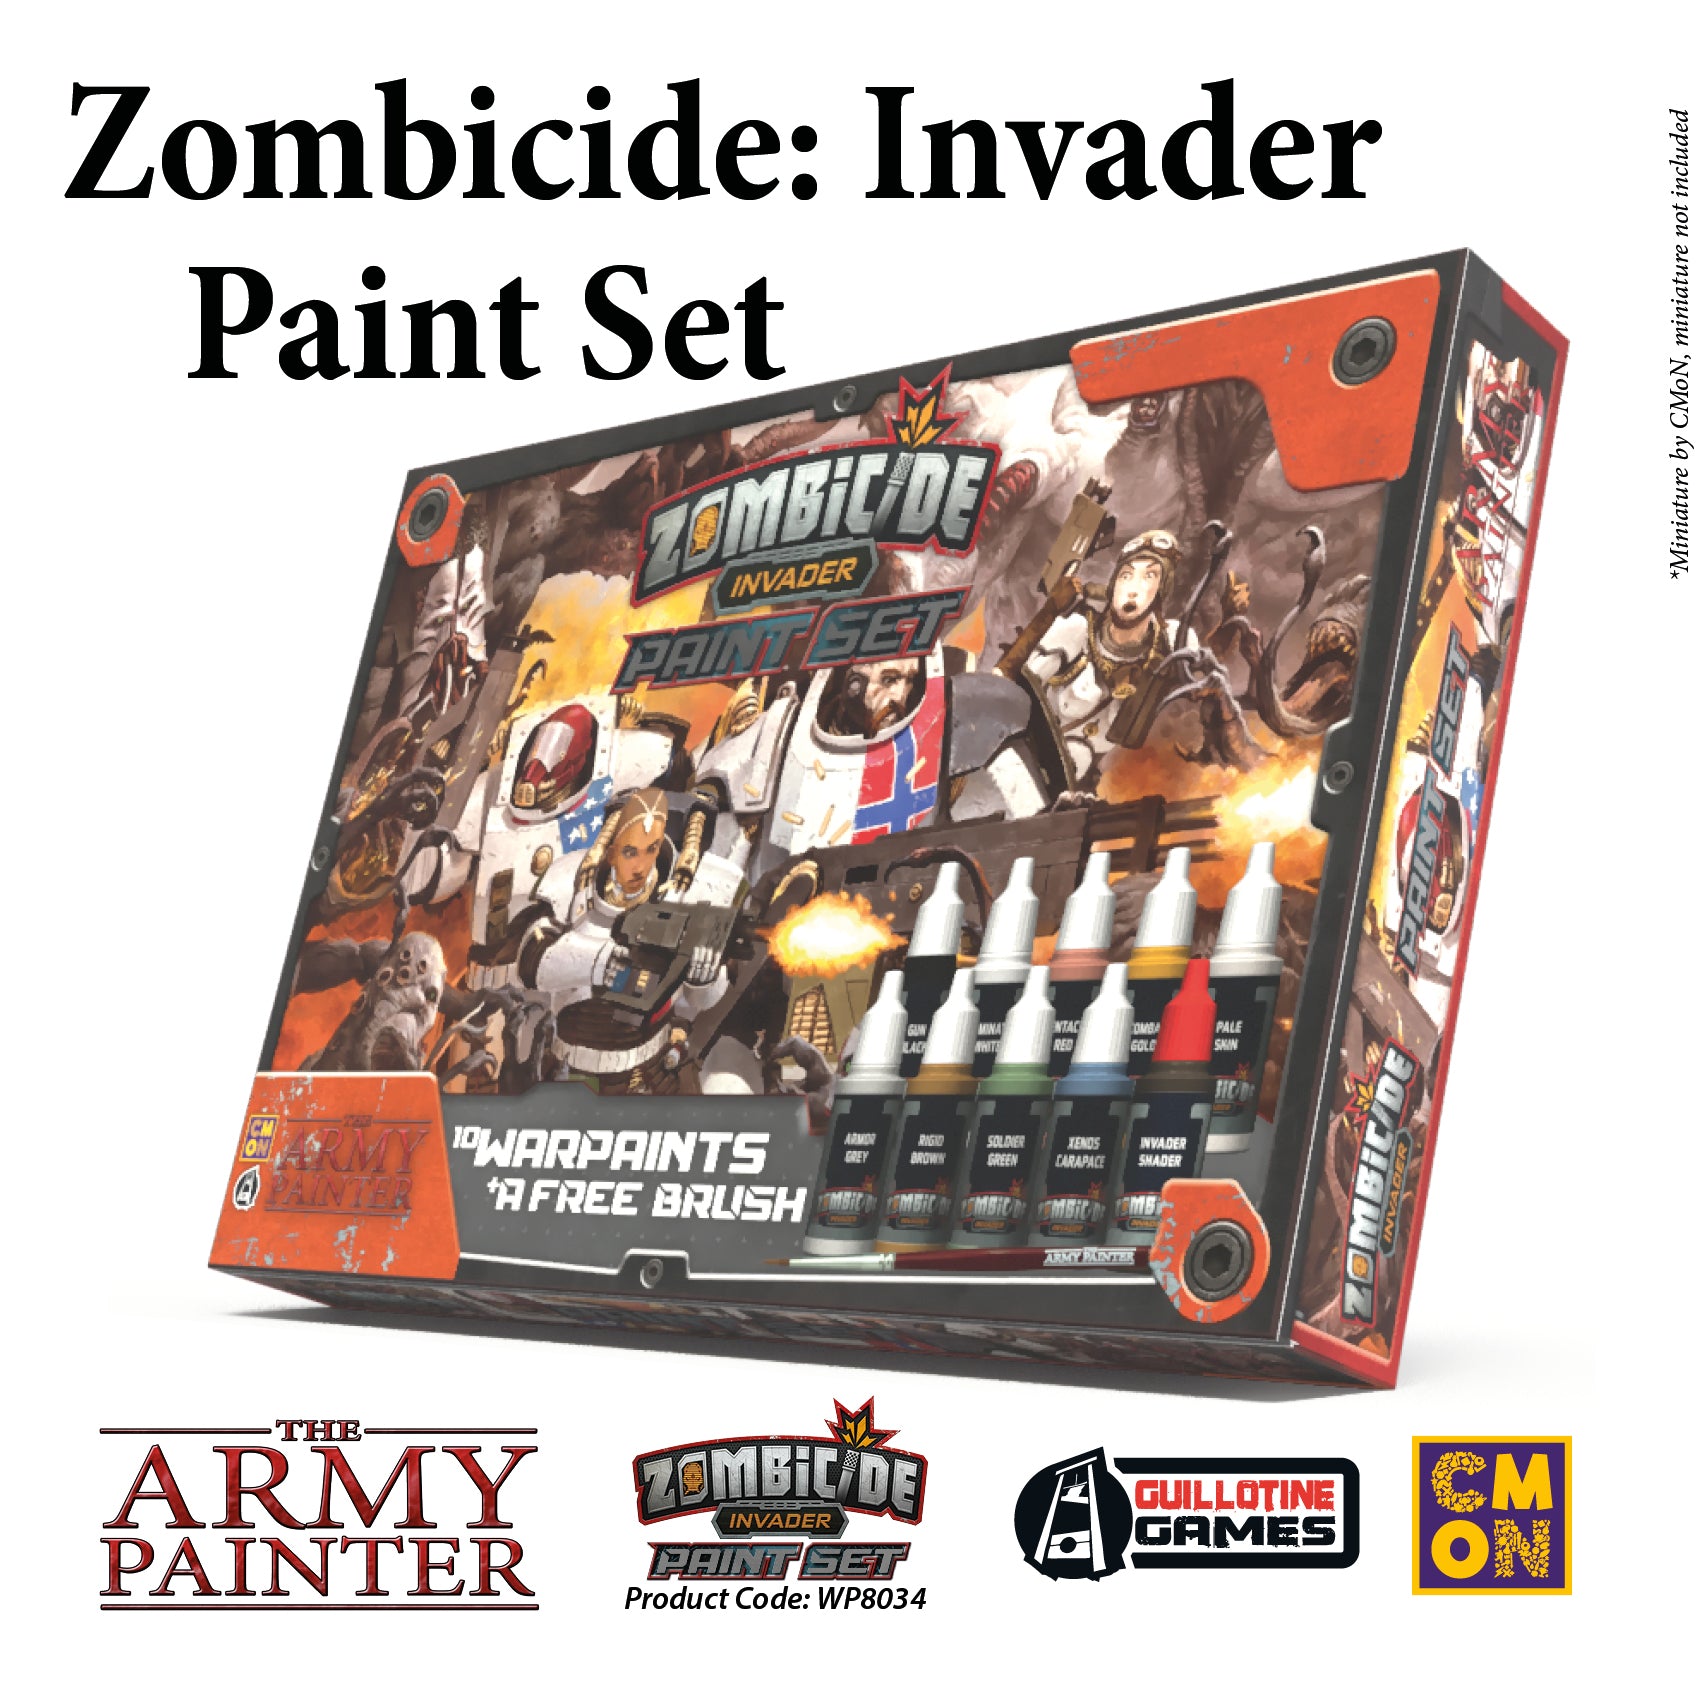 Zombicide Green Horde Paint Set: Incl. 6 warpaints - The Army Painter